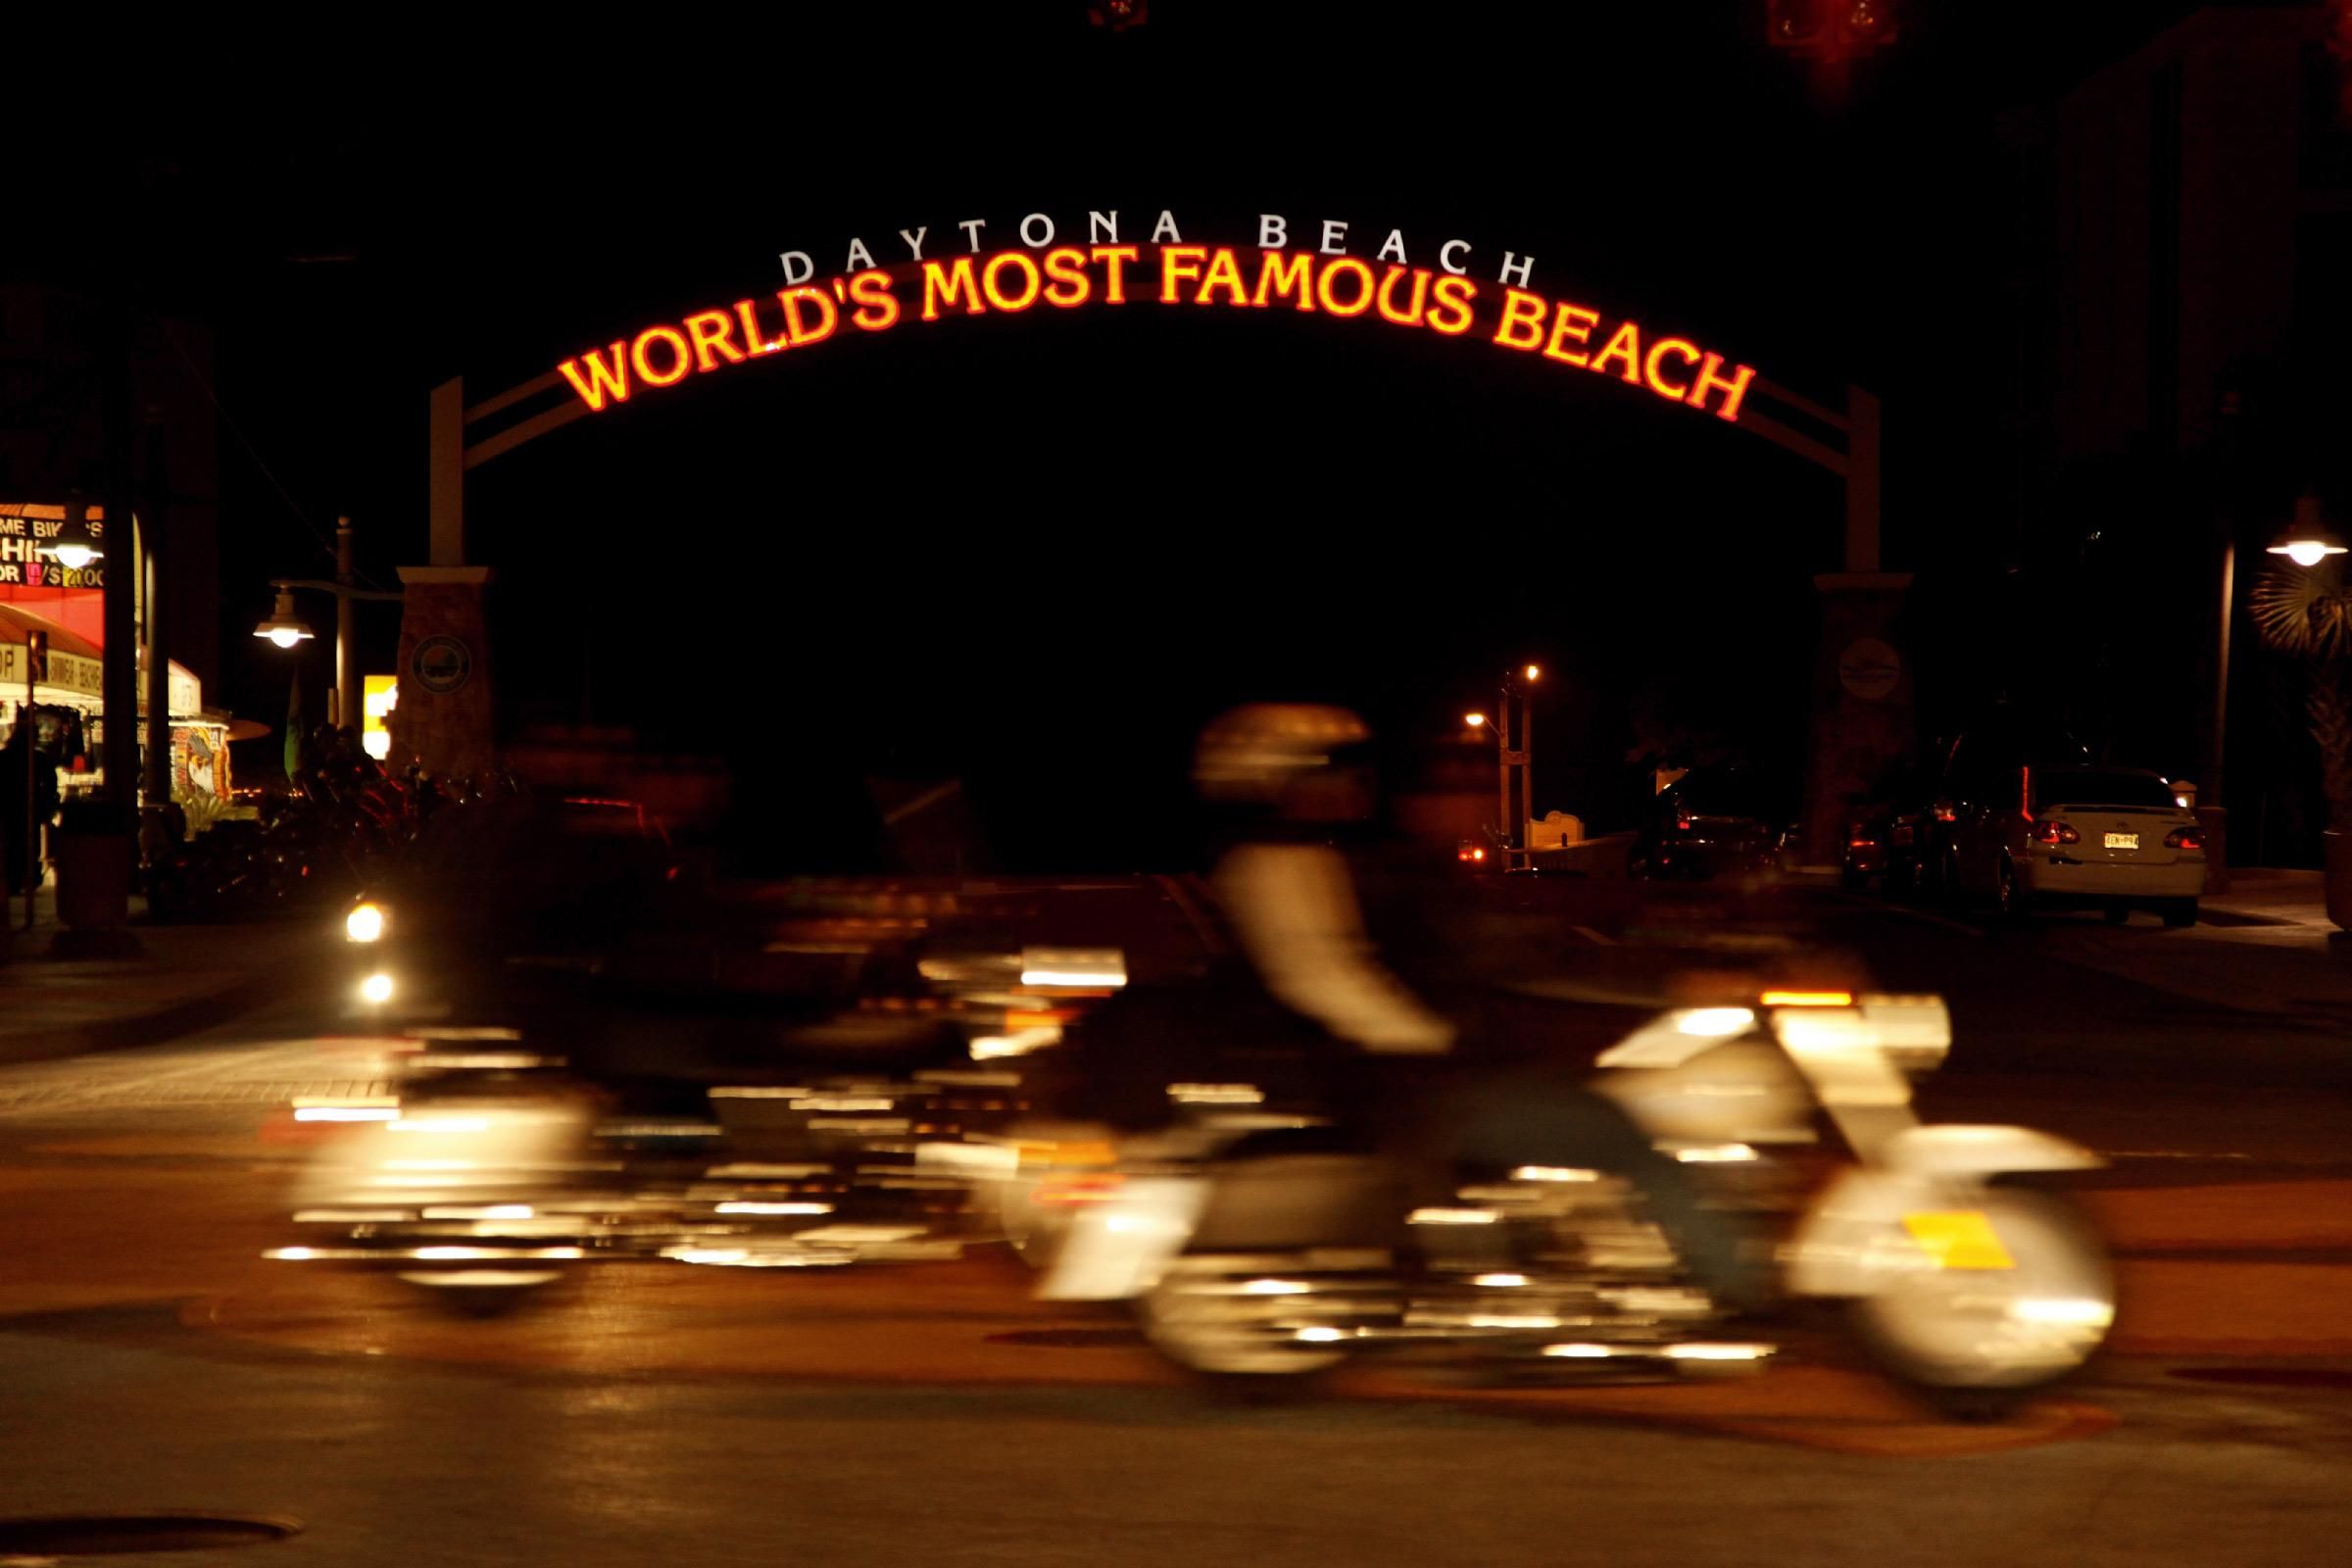 The world's most famous beach - Daytona